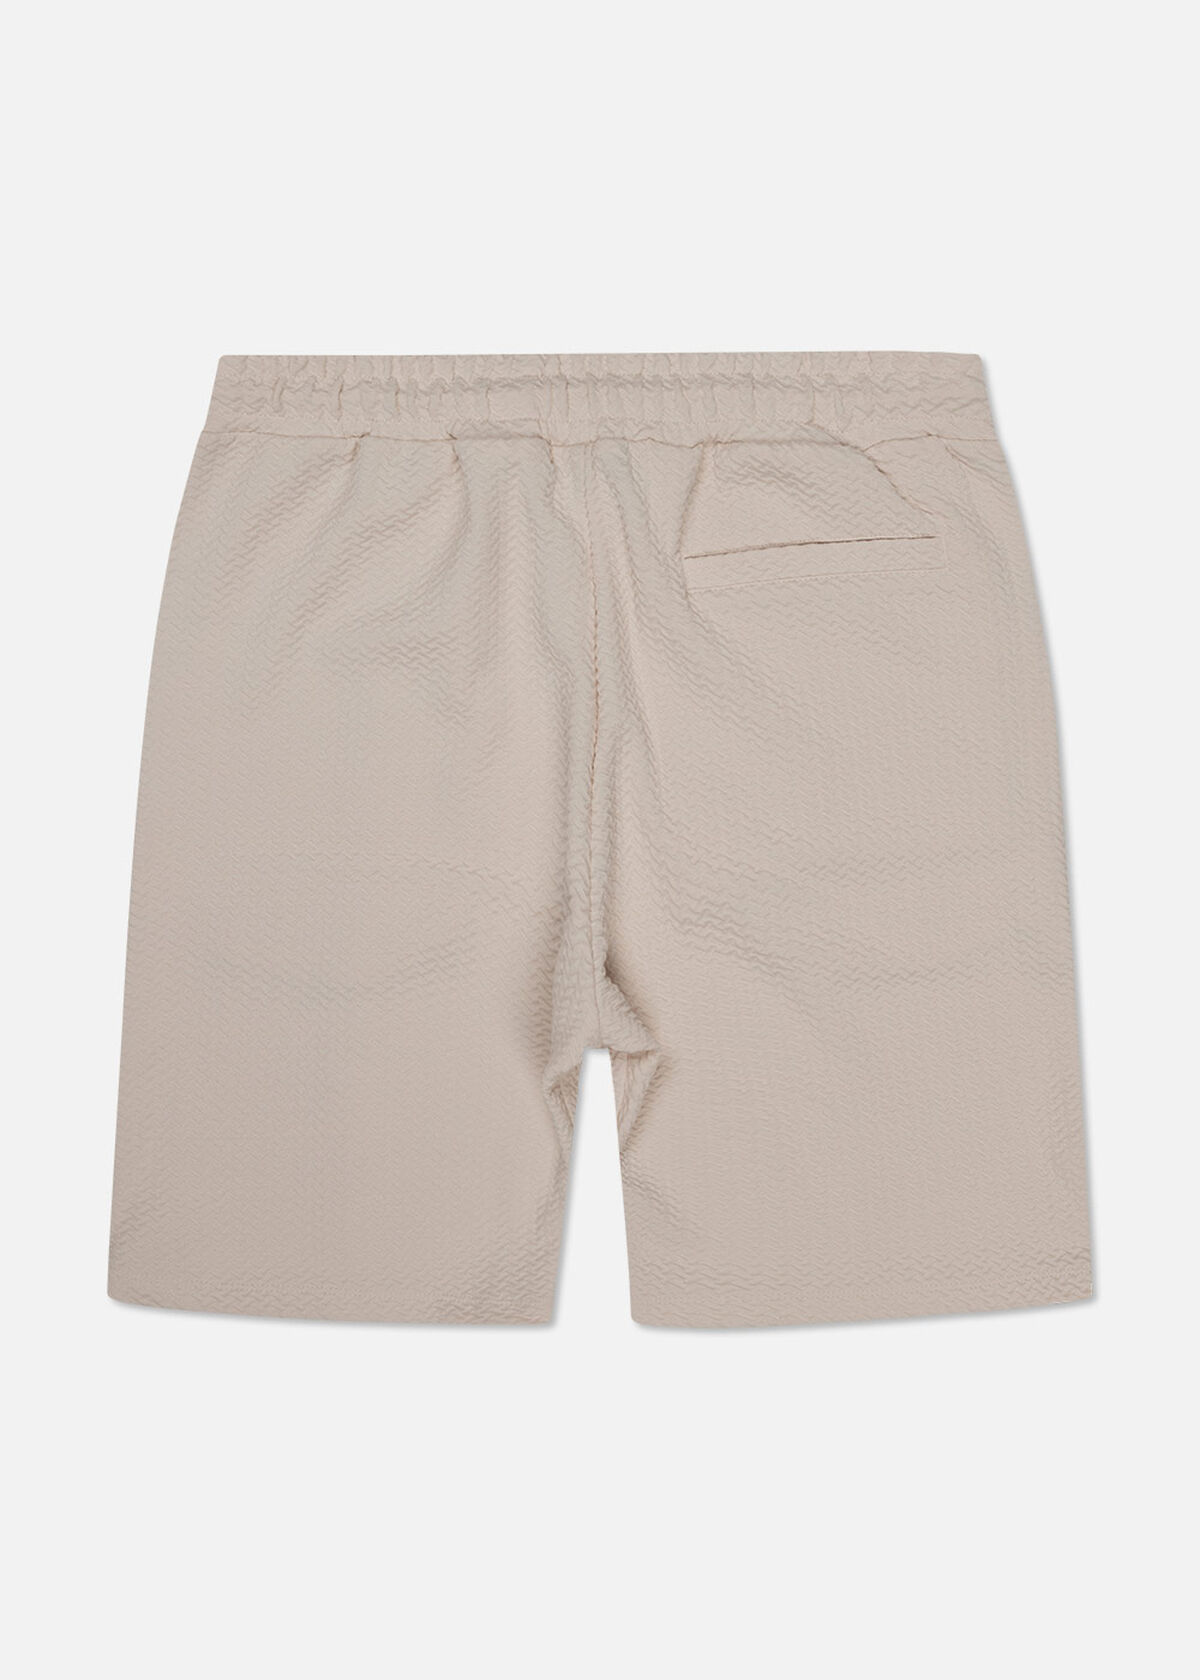 Boulevard Shorts - 97% Polyester / 3% Elastane, Crème, hi-res